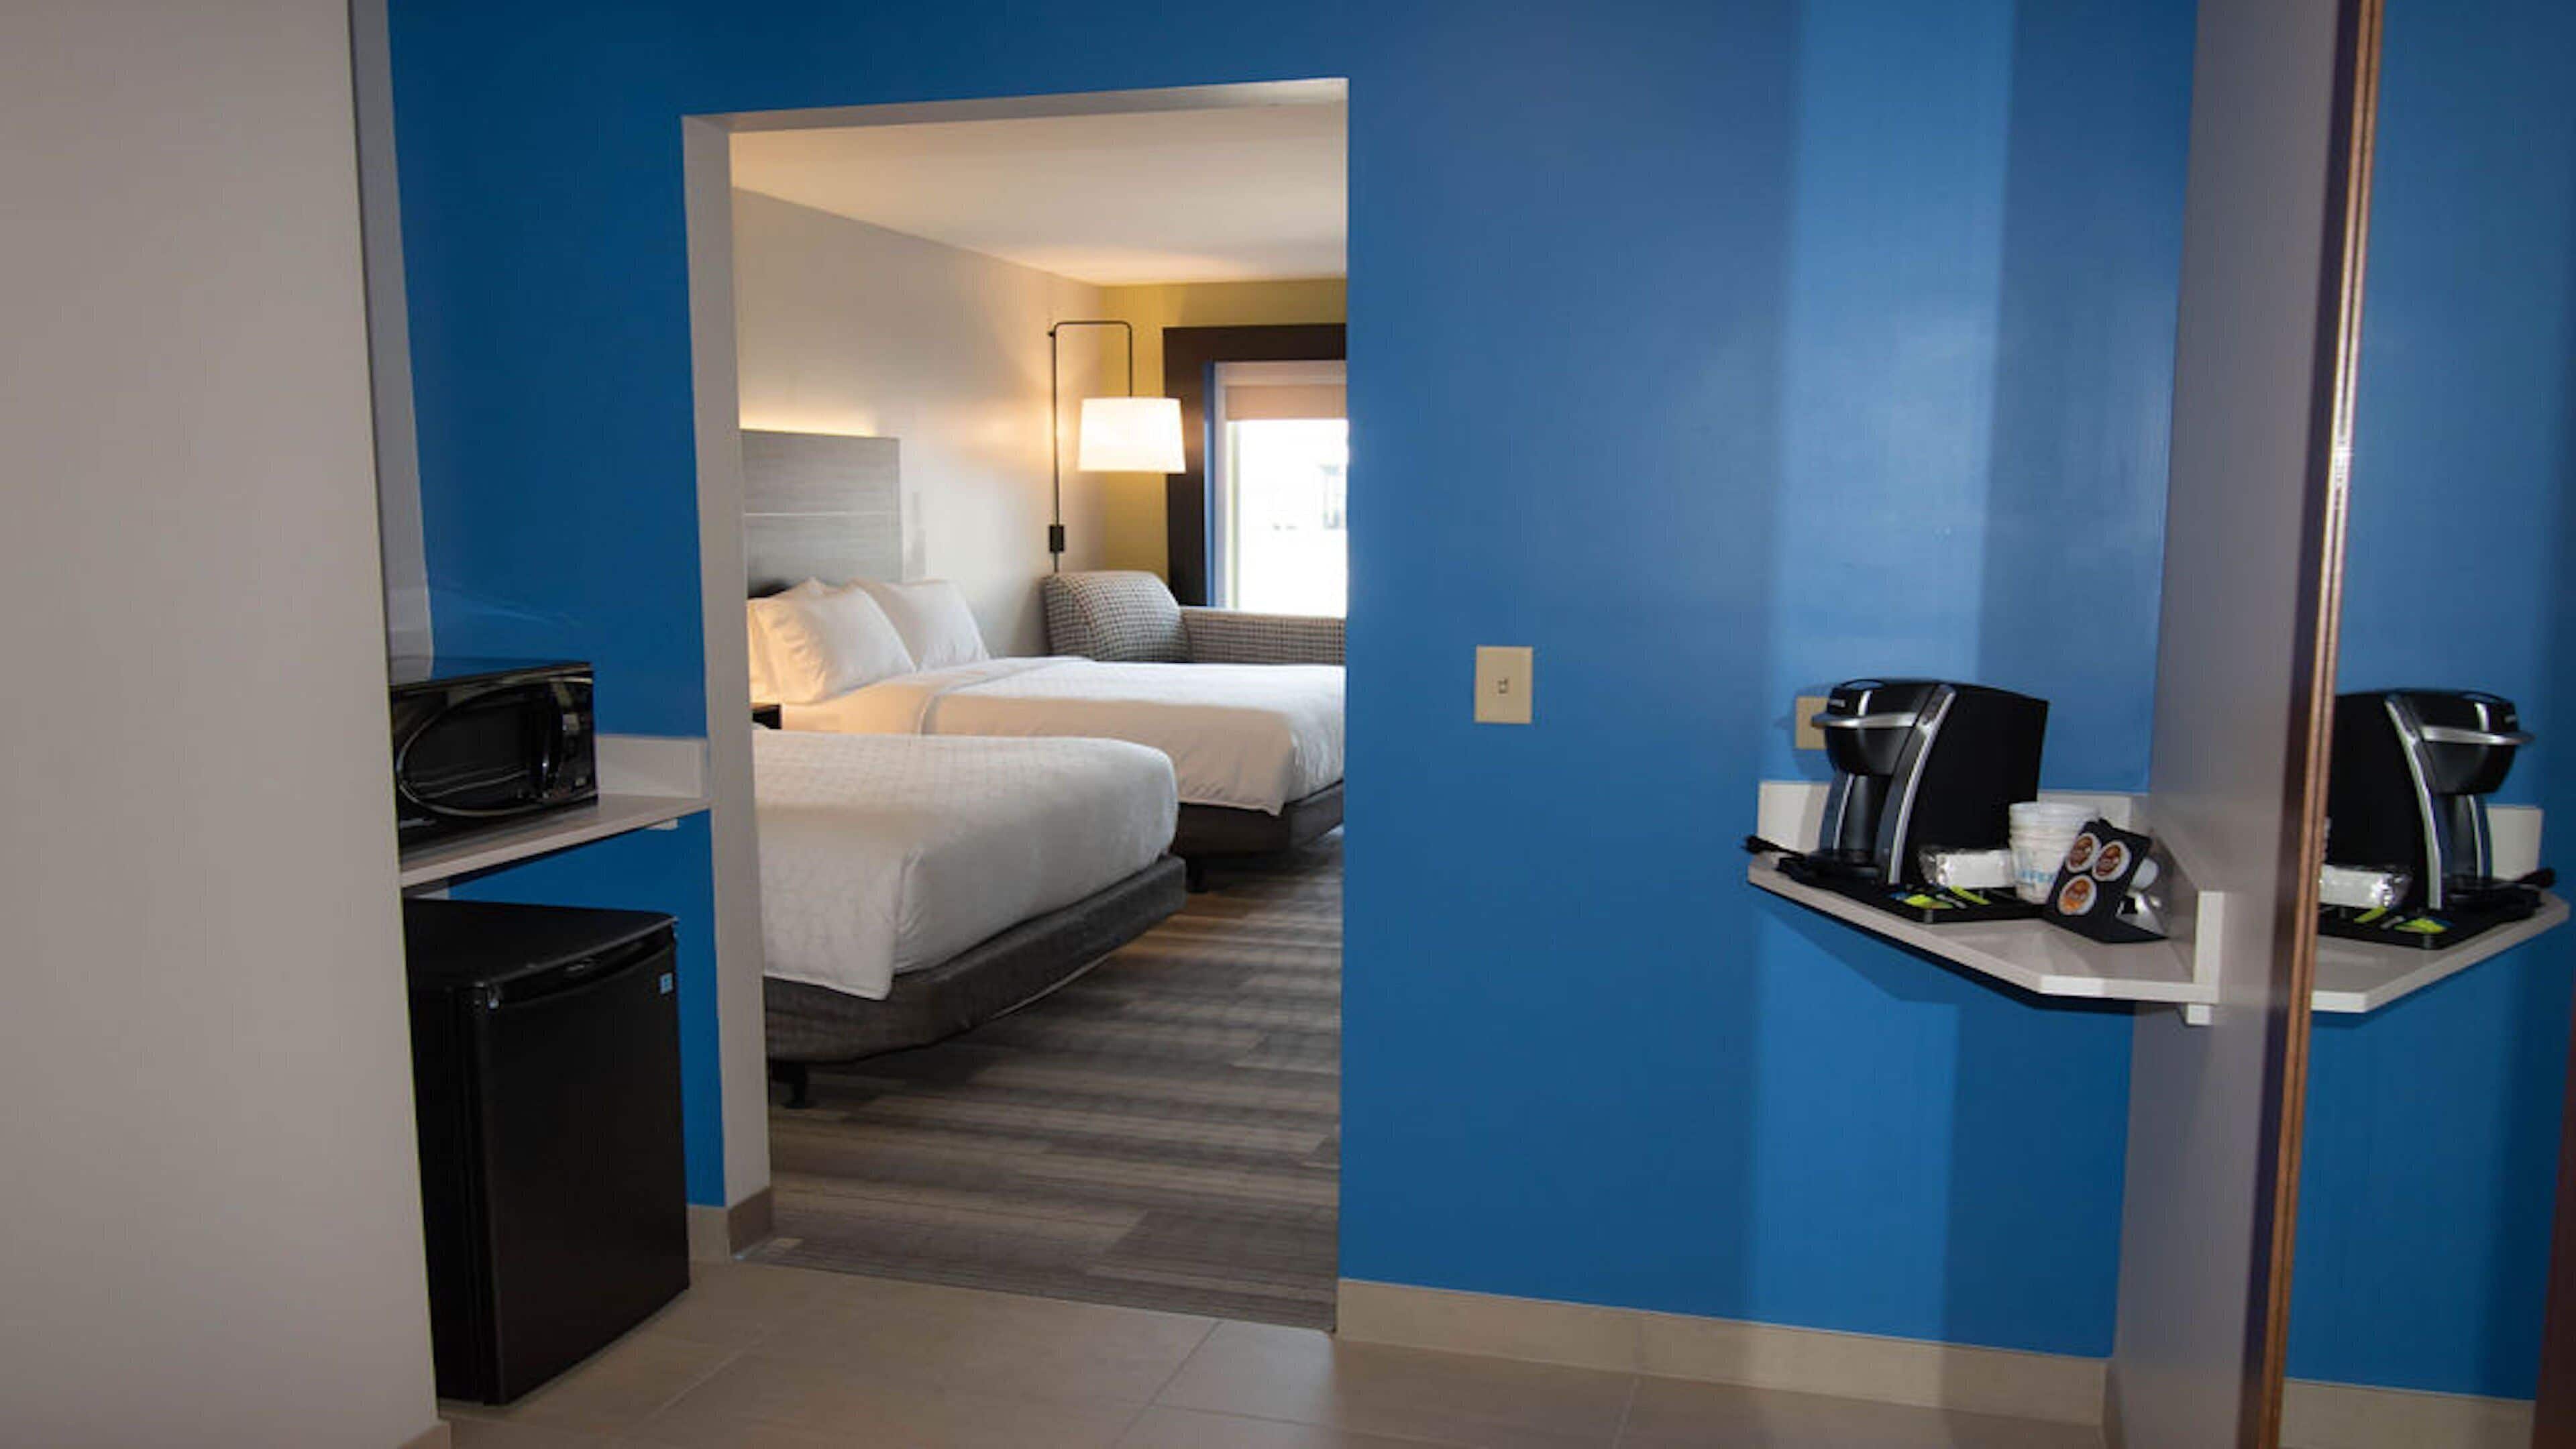 Holiday Inn Express & Suites Tonawanda - Buffalo Area